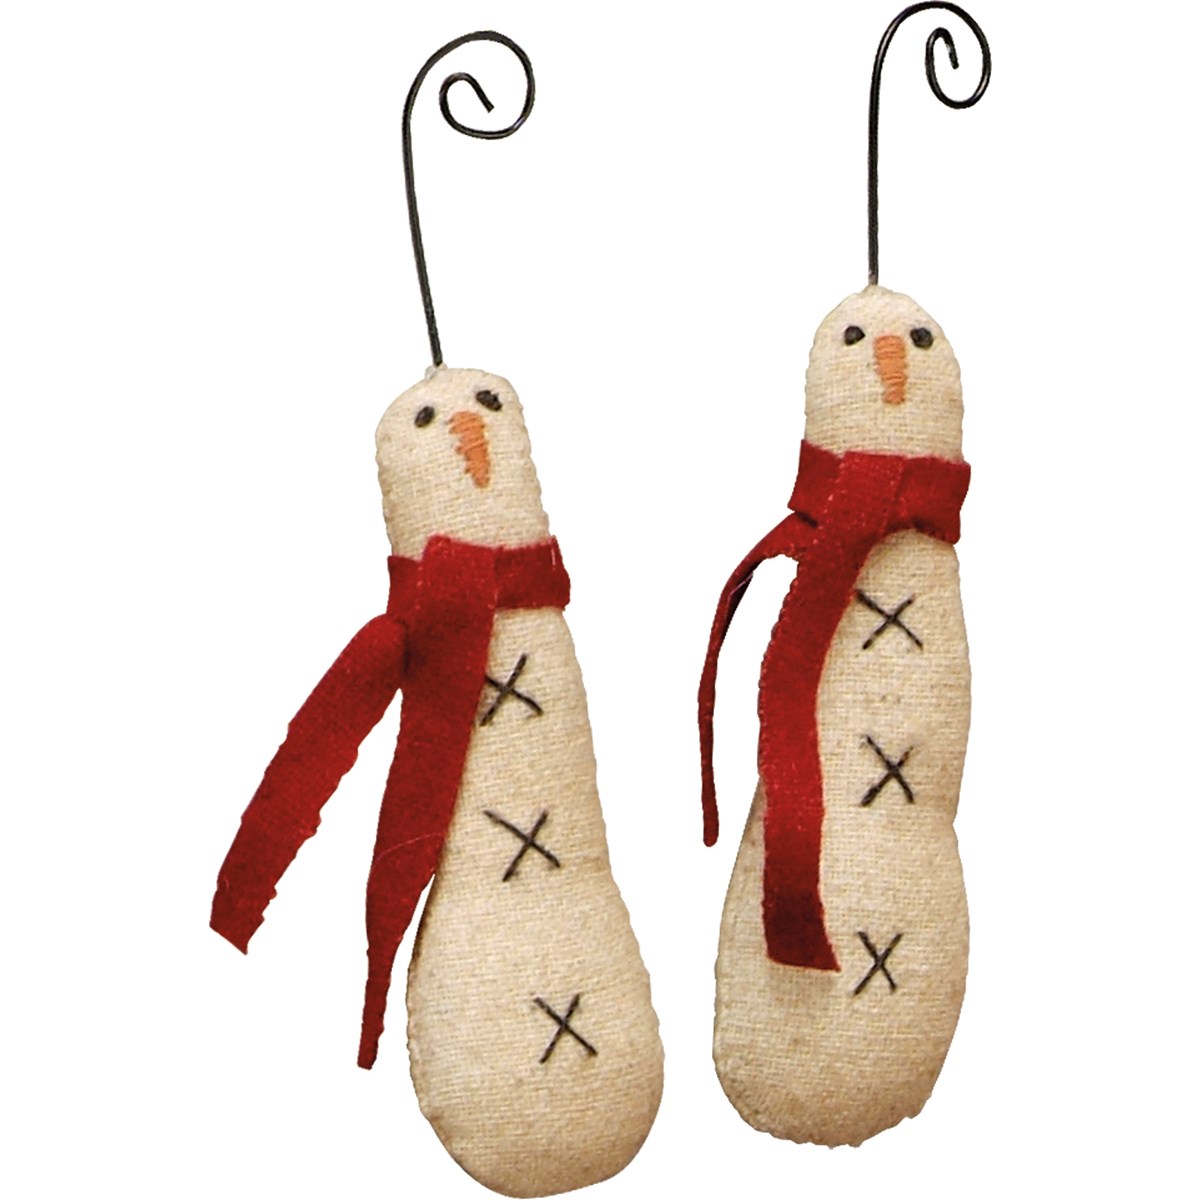 Ornament Set - Skinny Snowman - 1" x 3" x 0.75", Plus wire - Cotton, Wire